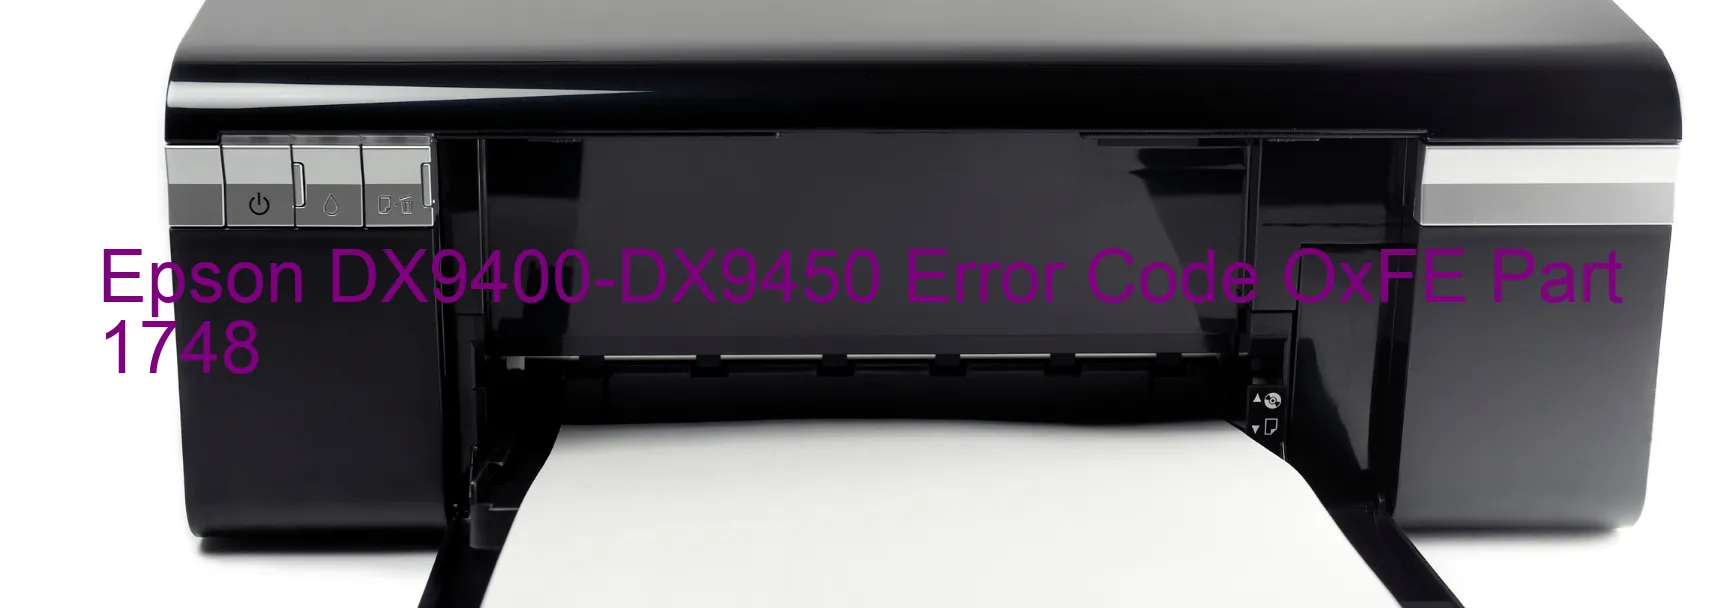 Epson DX9400-DX9450 Error Code OxFE Part 1748